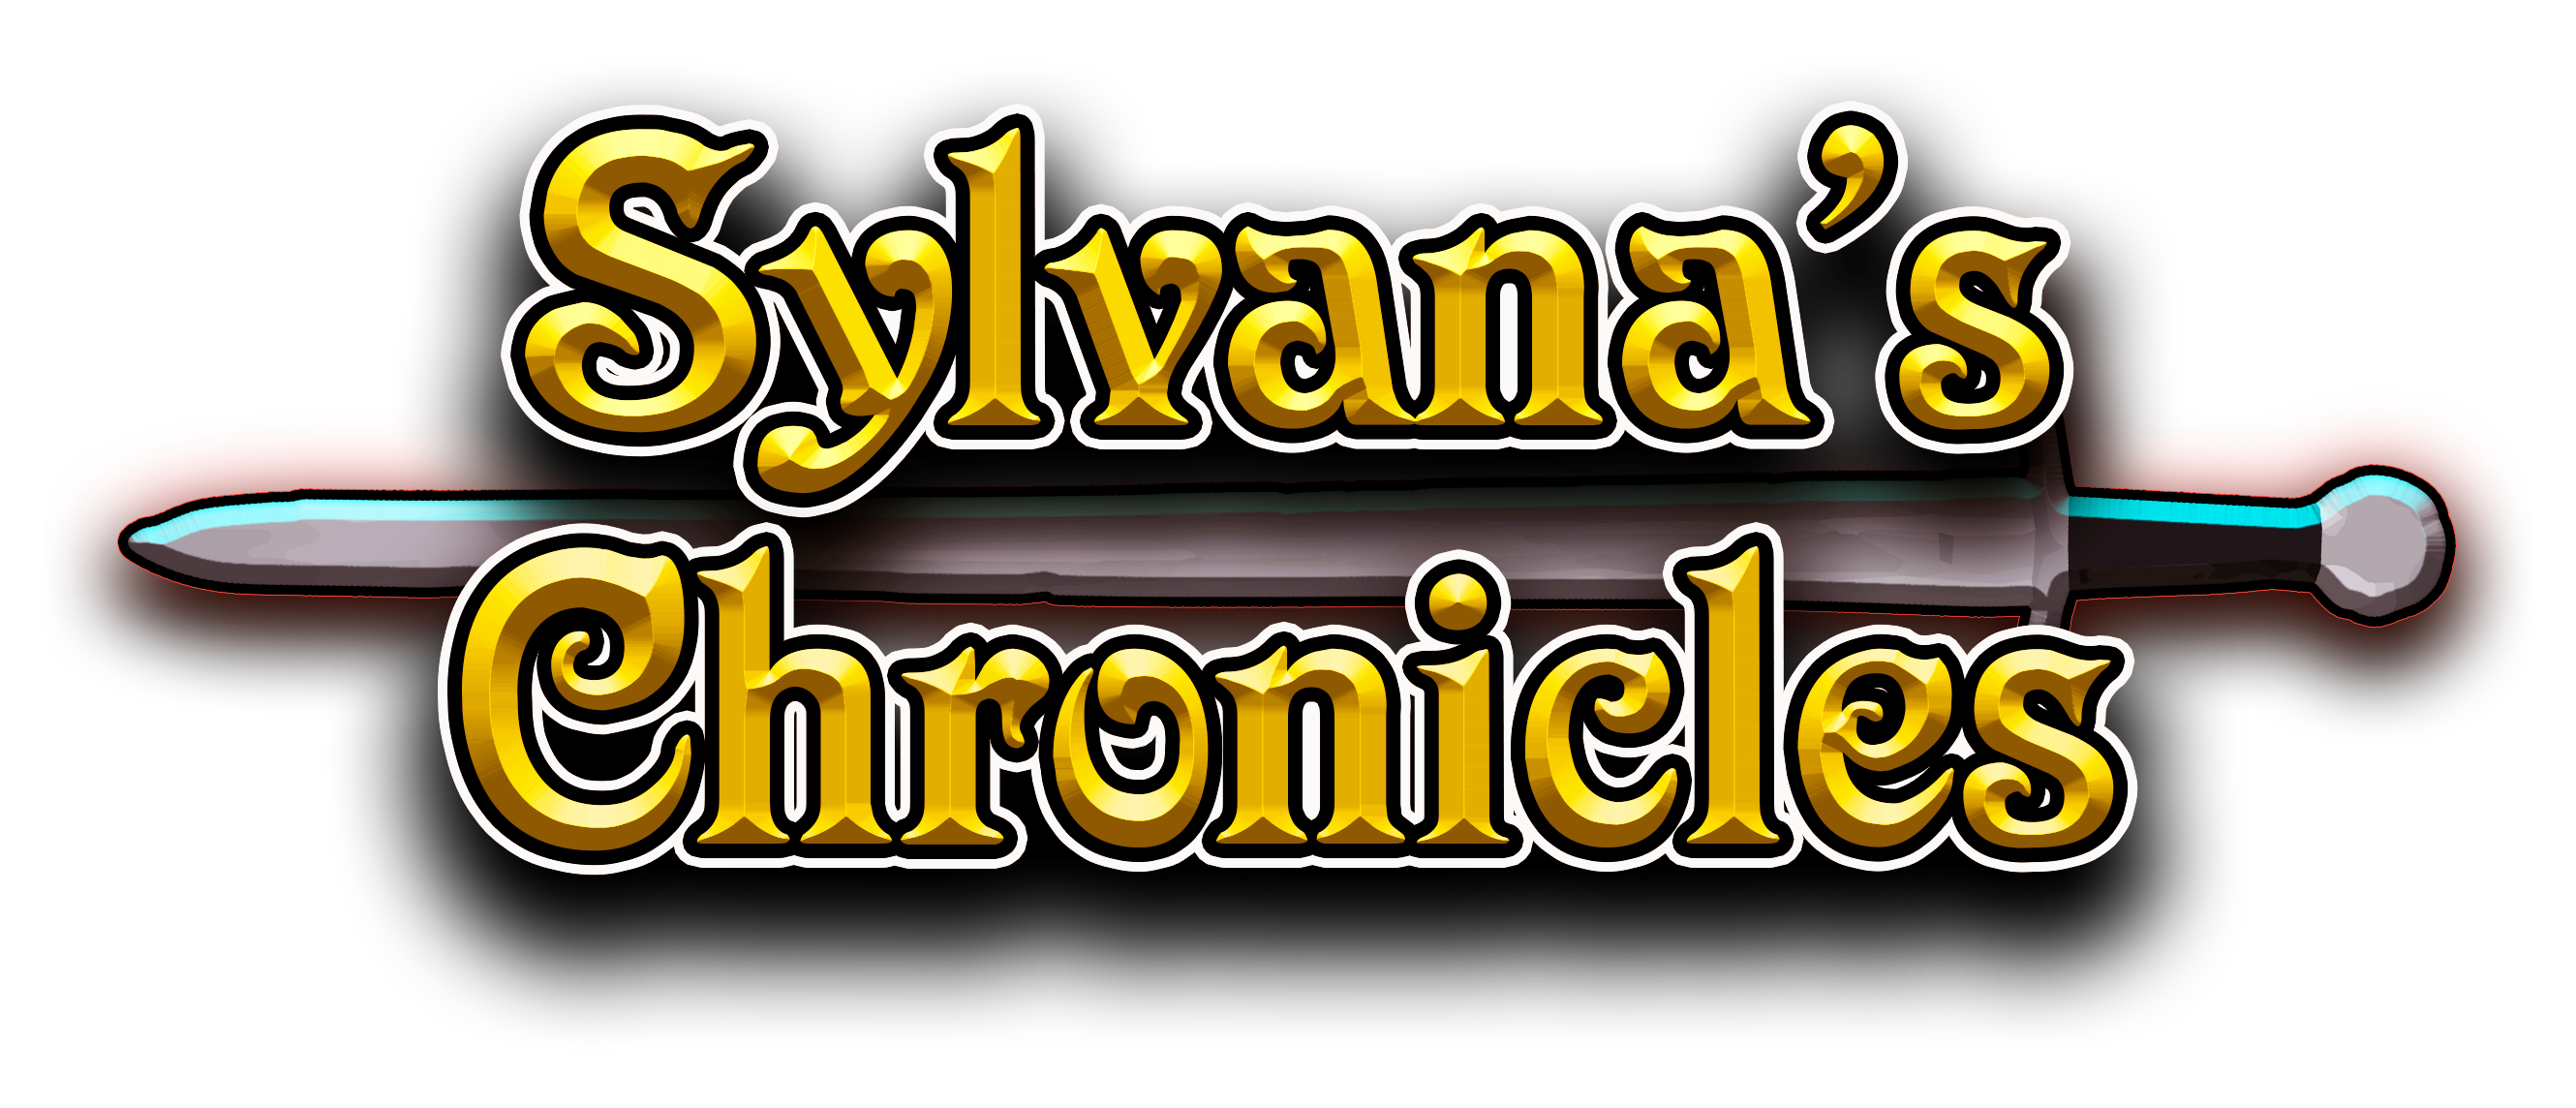 Sylvana's Chronicles (Demo)